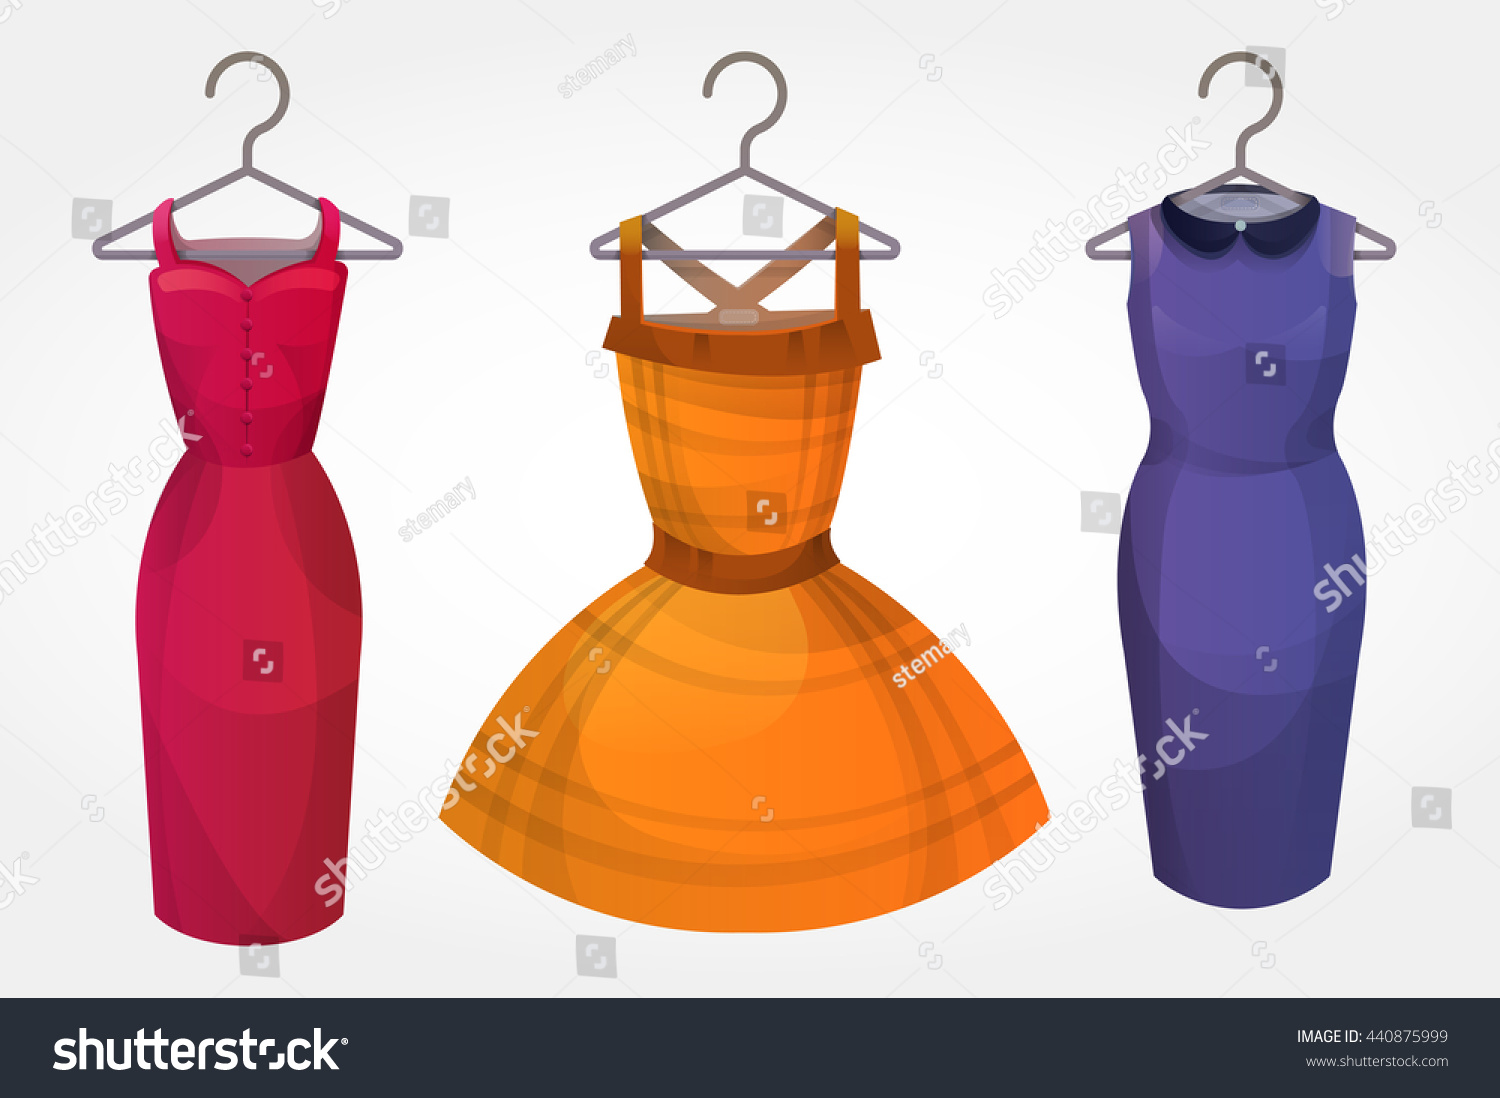 Set Of Bright Dresses On Hangers Stock Vector Illustration 440875999 ...